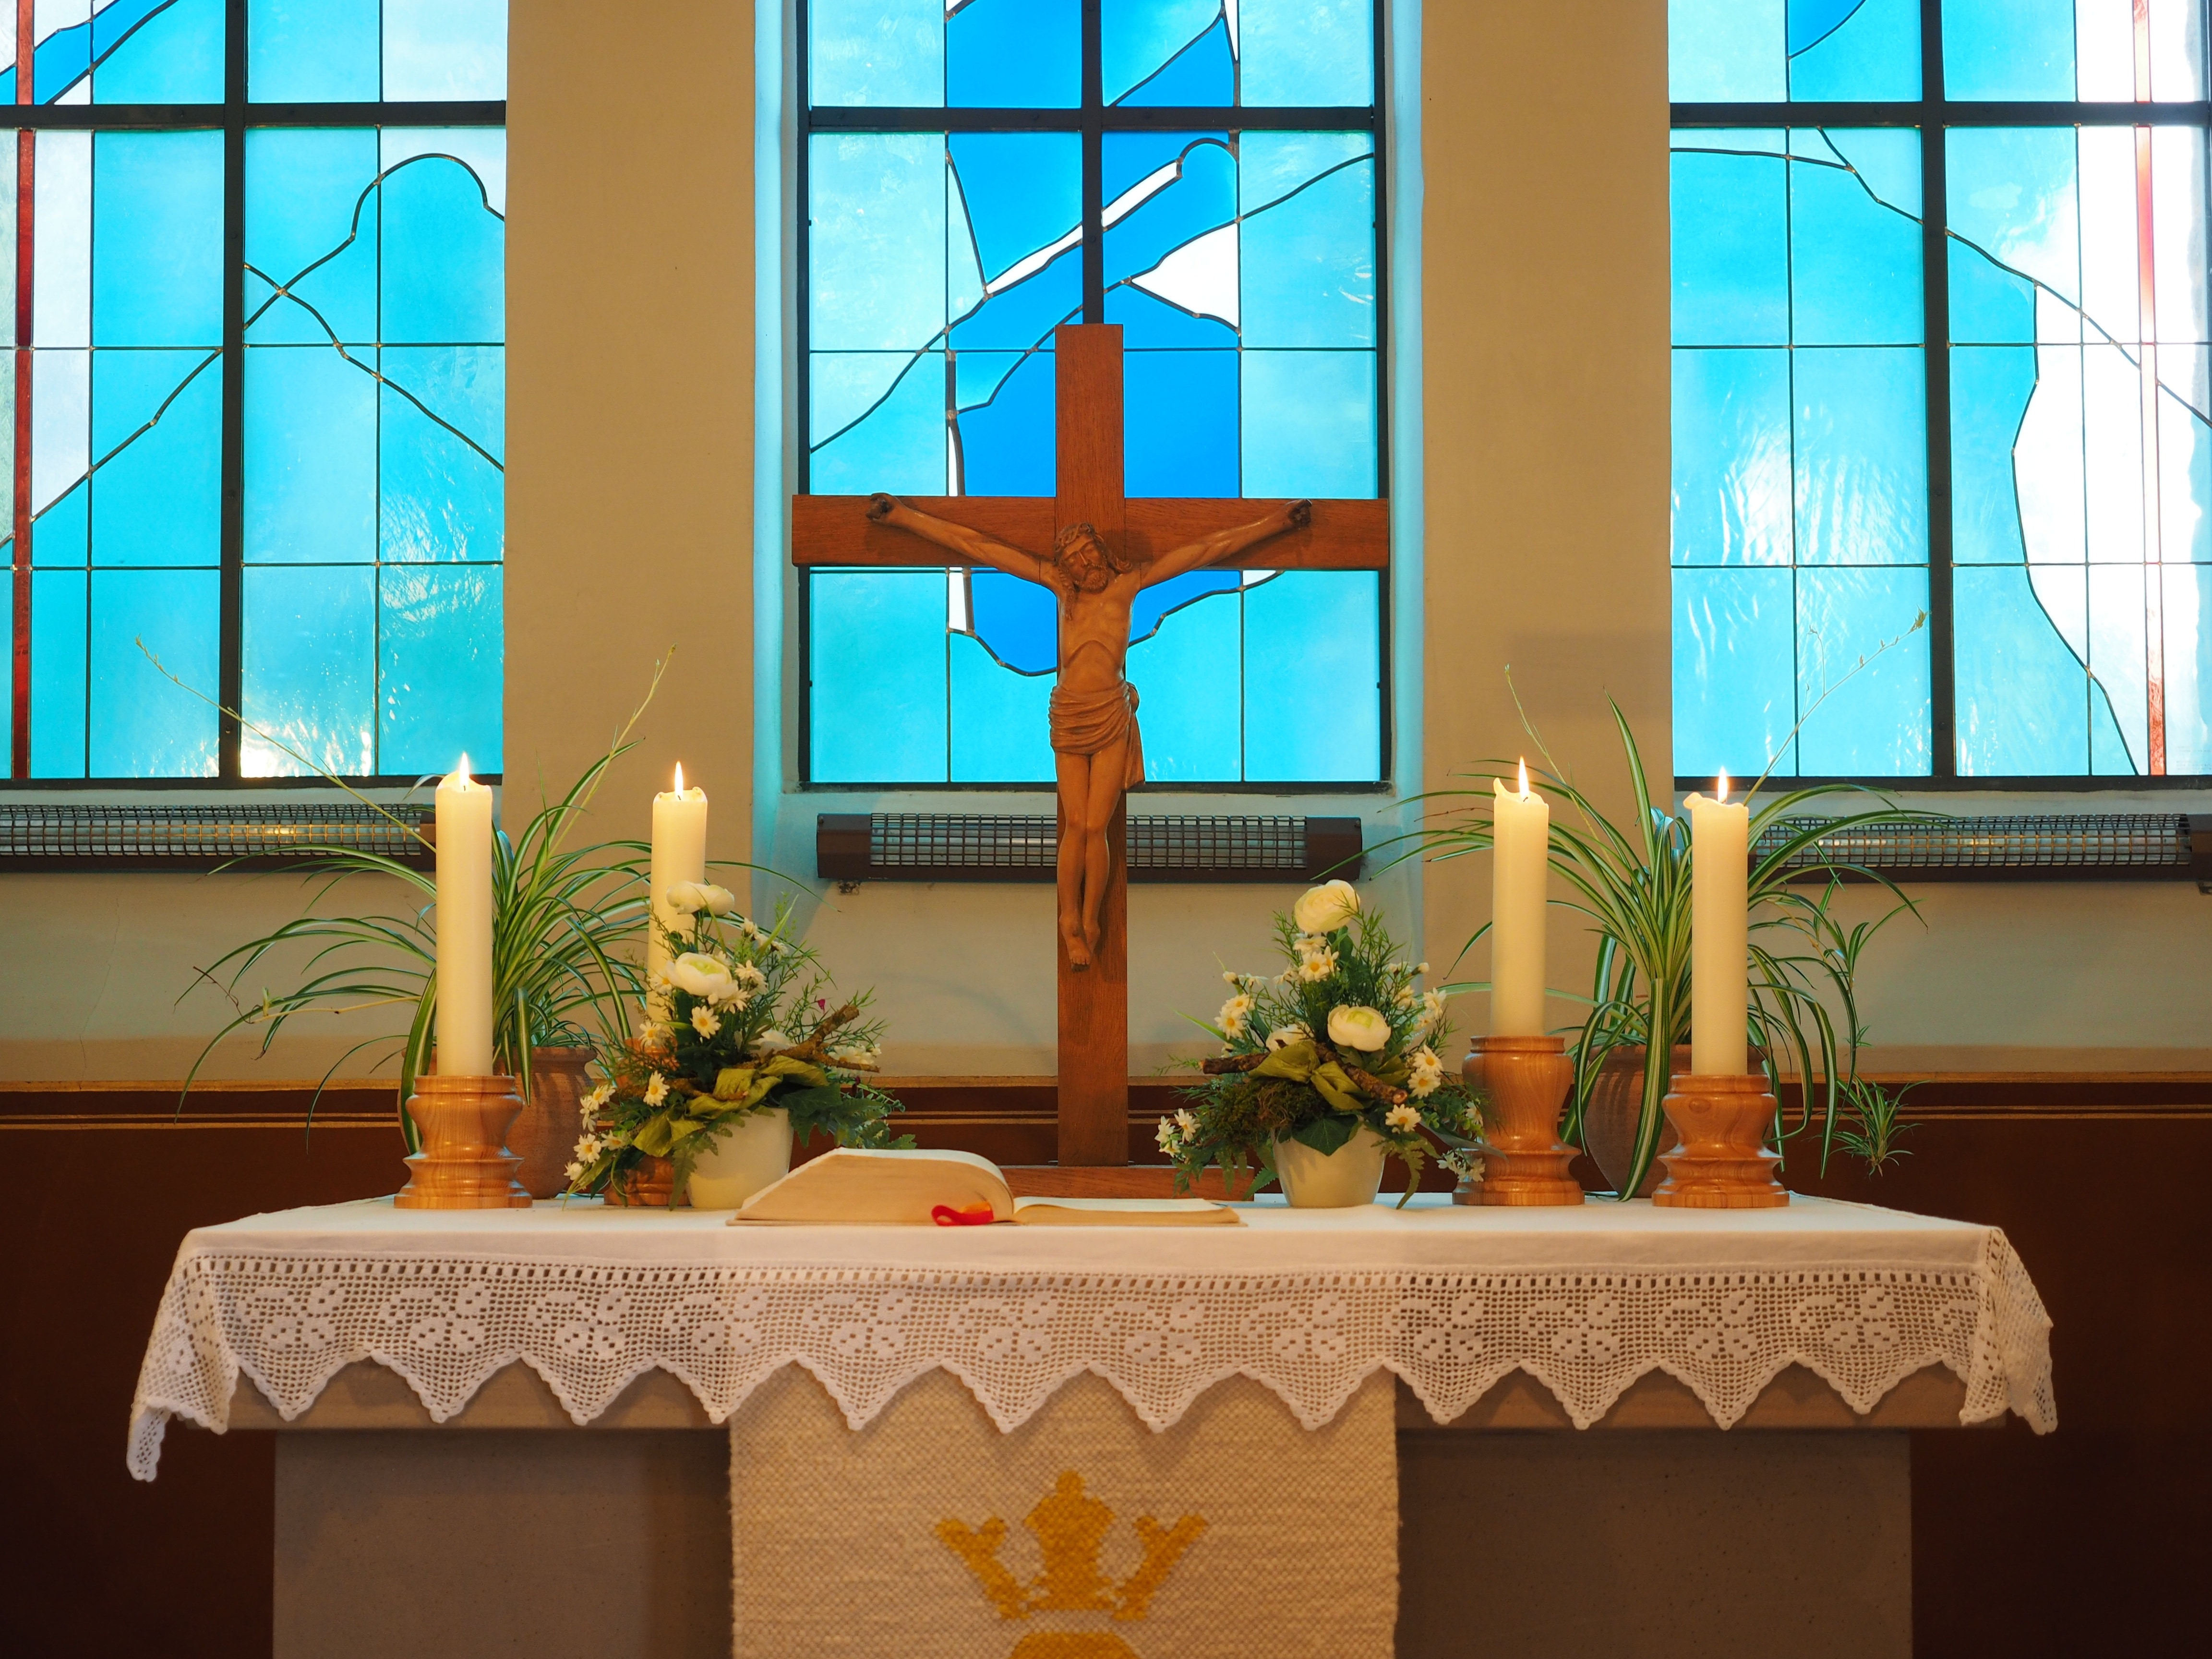 Altar, Religion, Jesus, Cross, Church, window, indoors